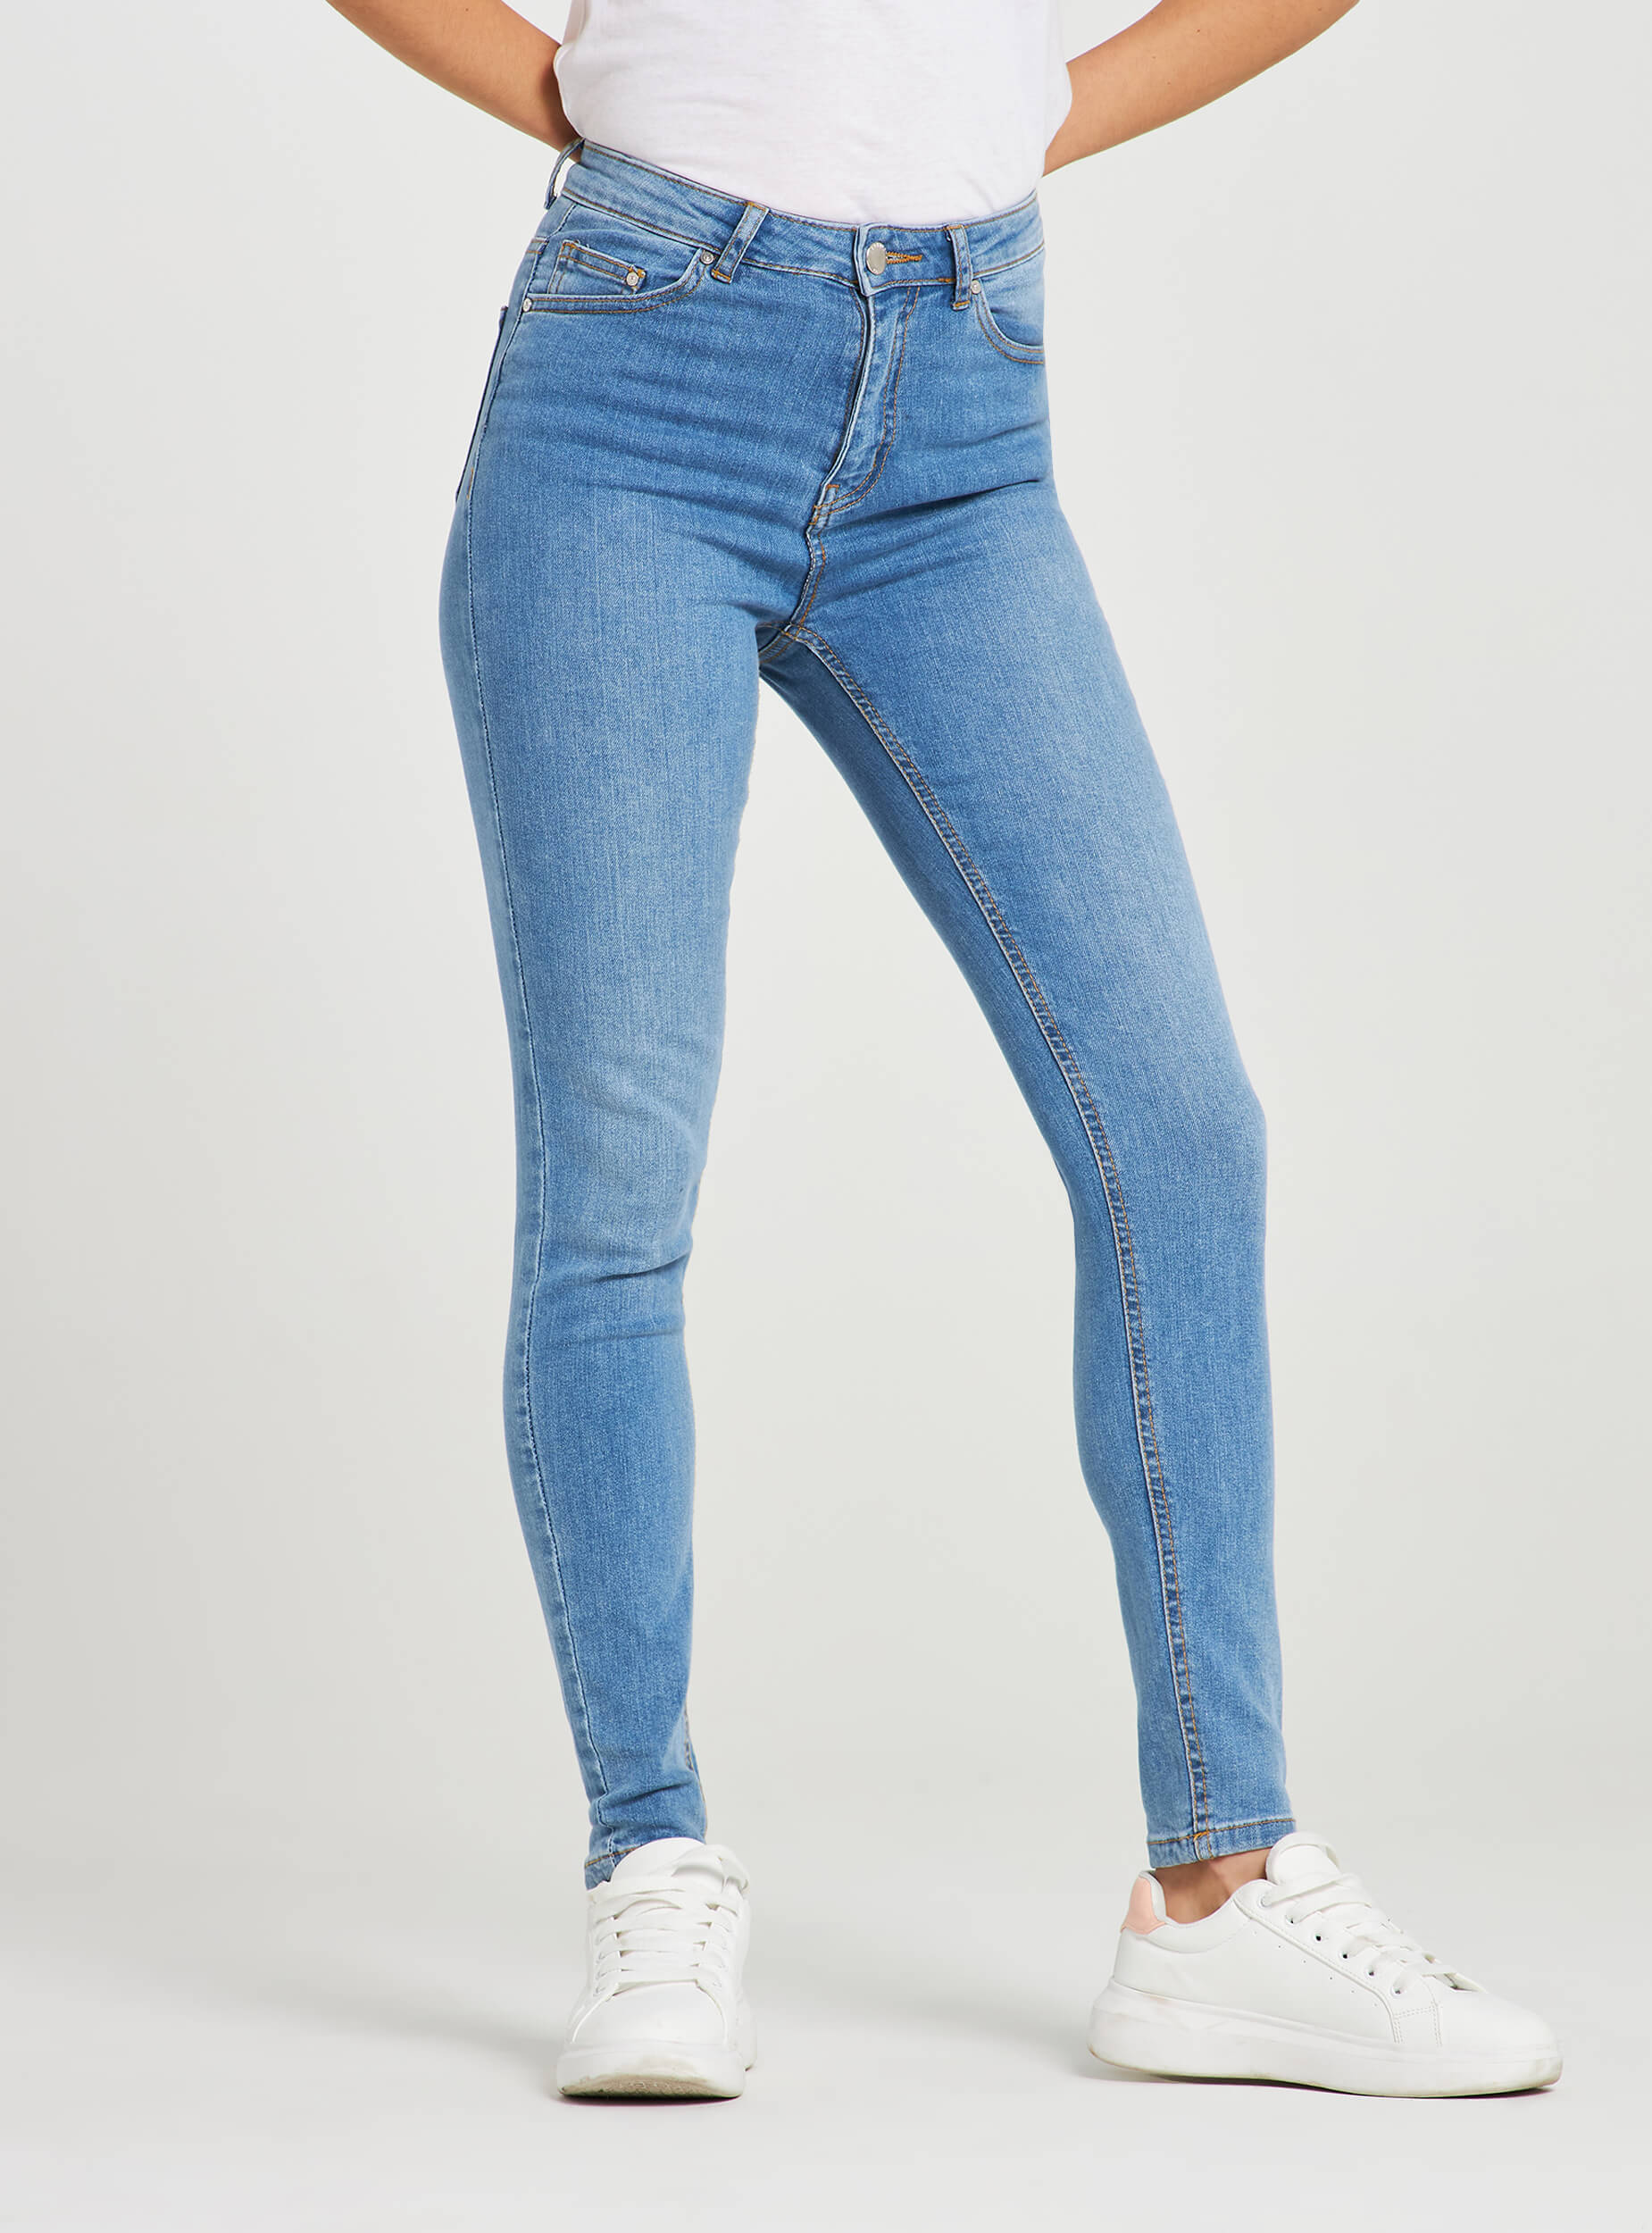 jeans high waist stretch